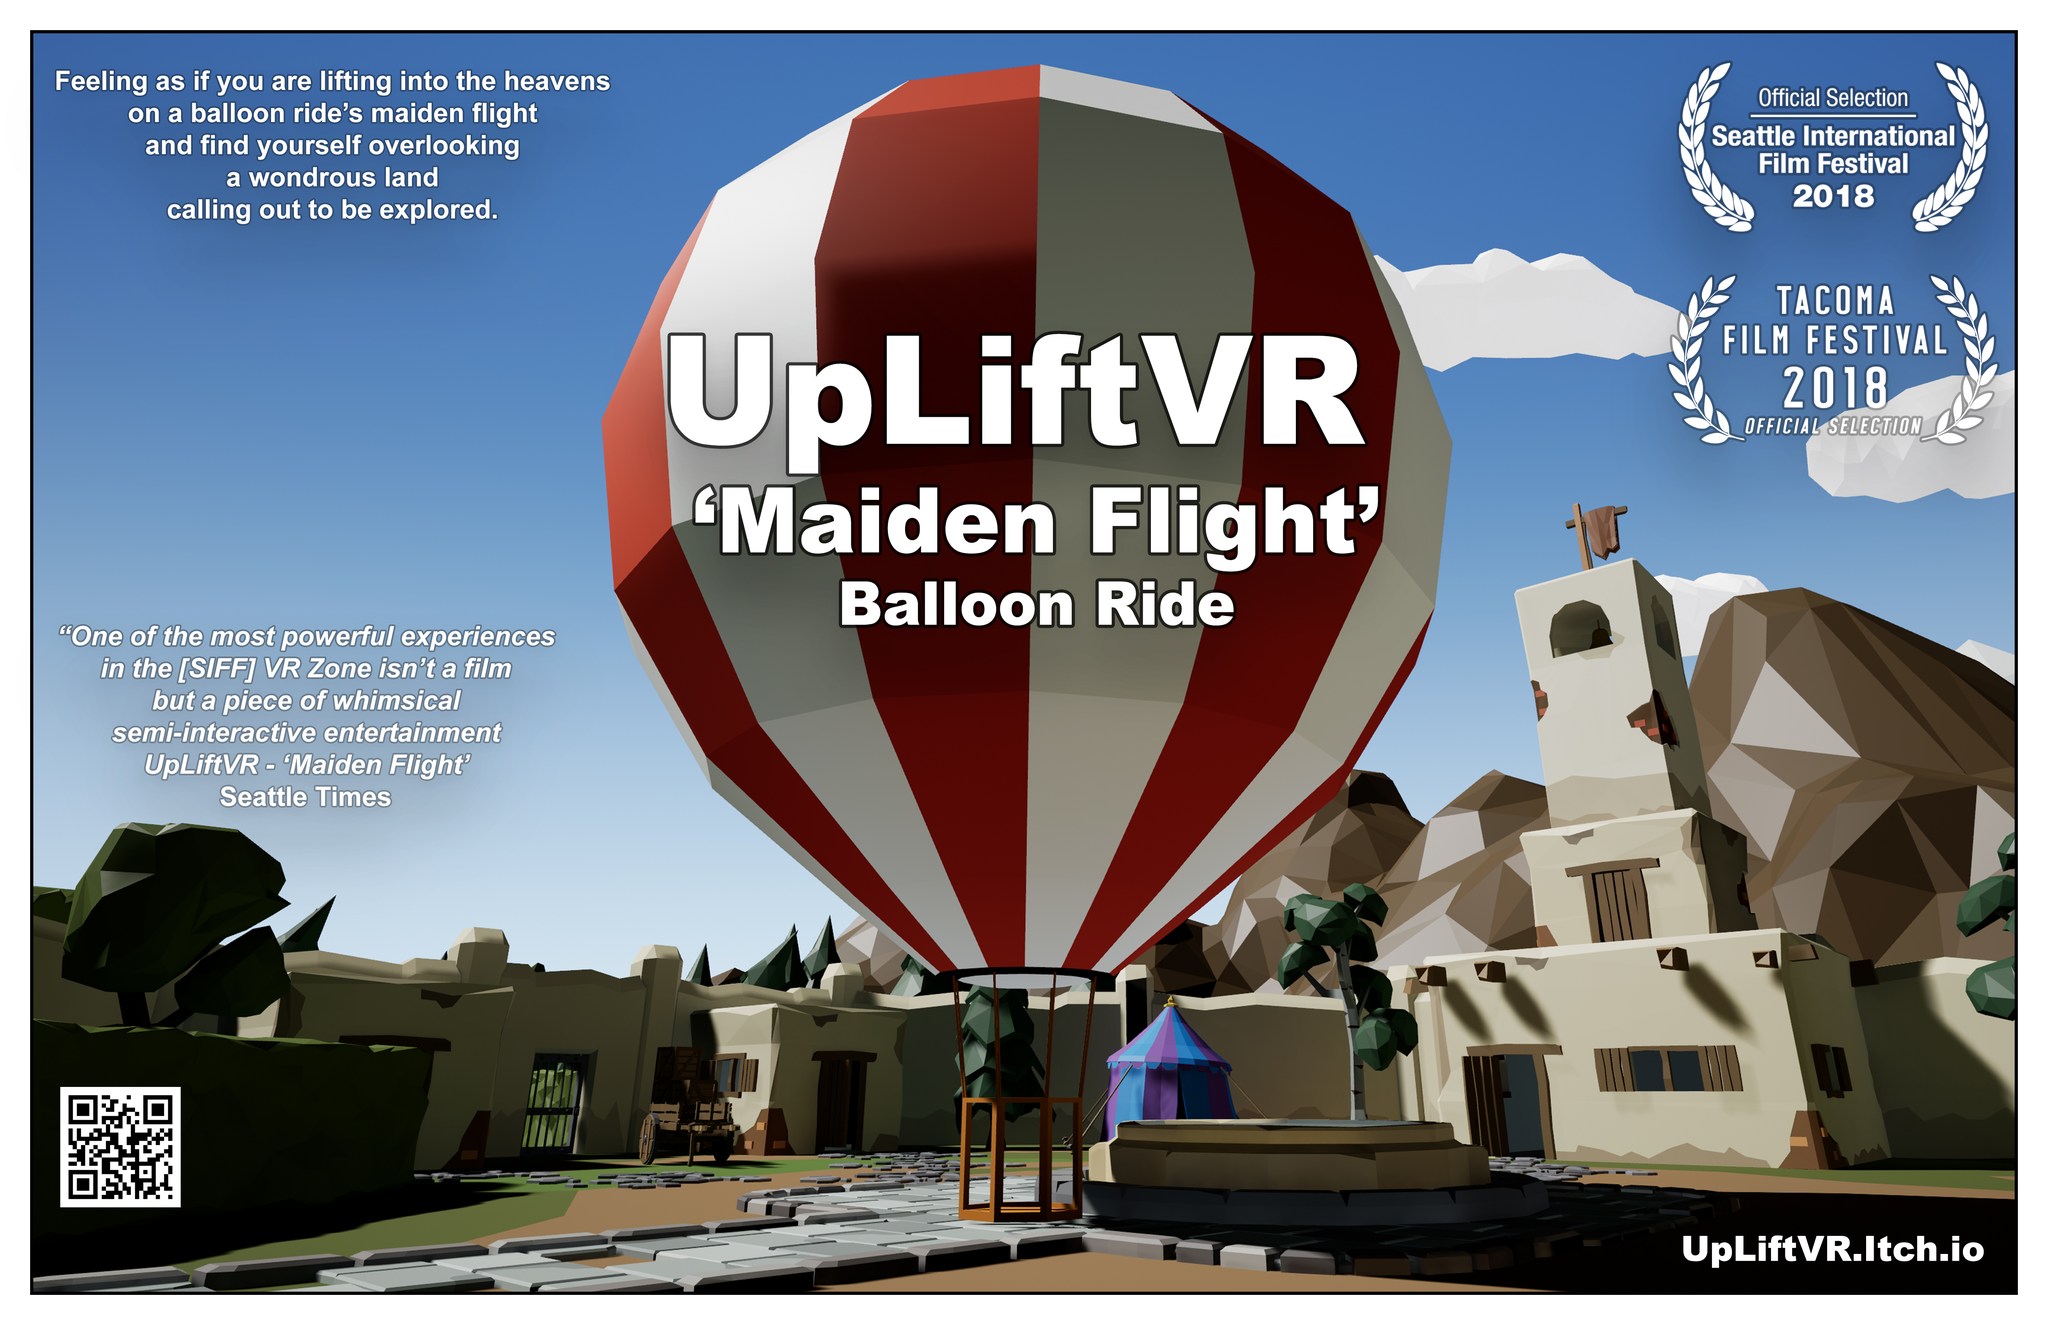 UpLiftVR 'Maiden Flight' Balloon Ride